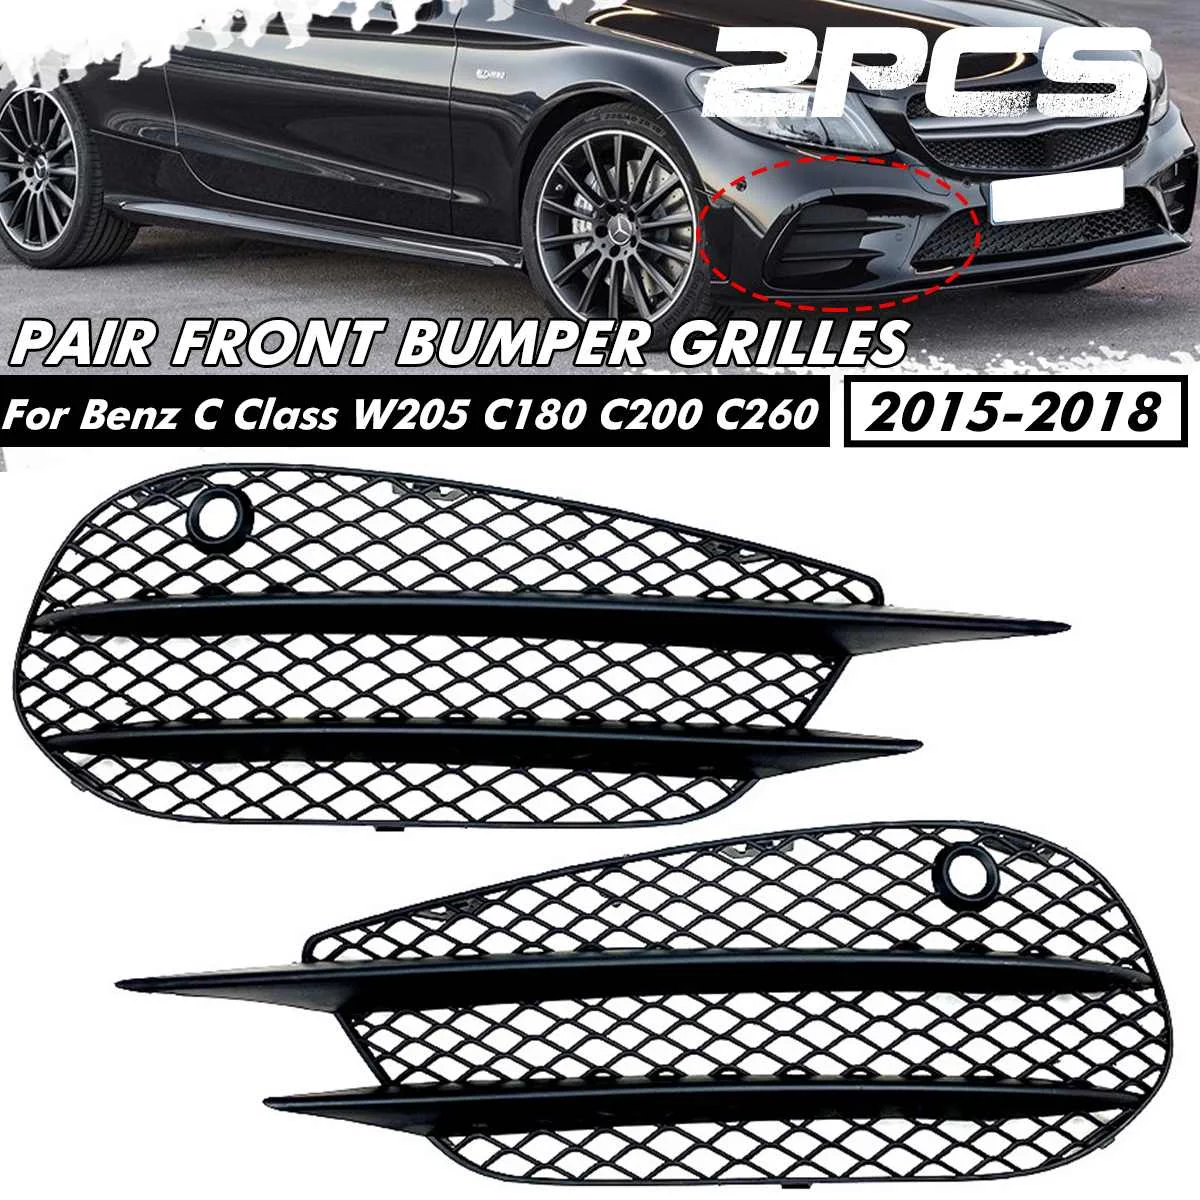 

Car Front Bumper Grill For Mercedes Benz C Class W205 C180 C200 C260 2015 2016 20172018 Black Front BumperGrille Fog Light Cover